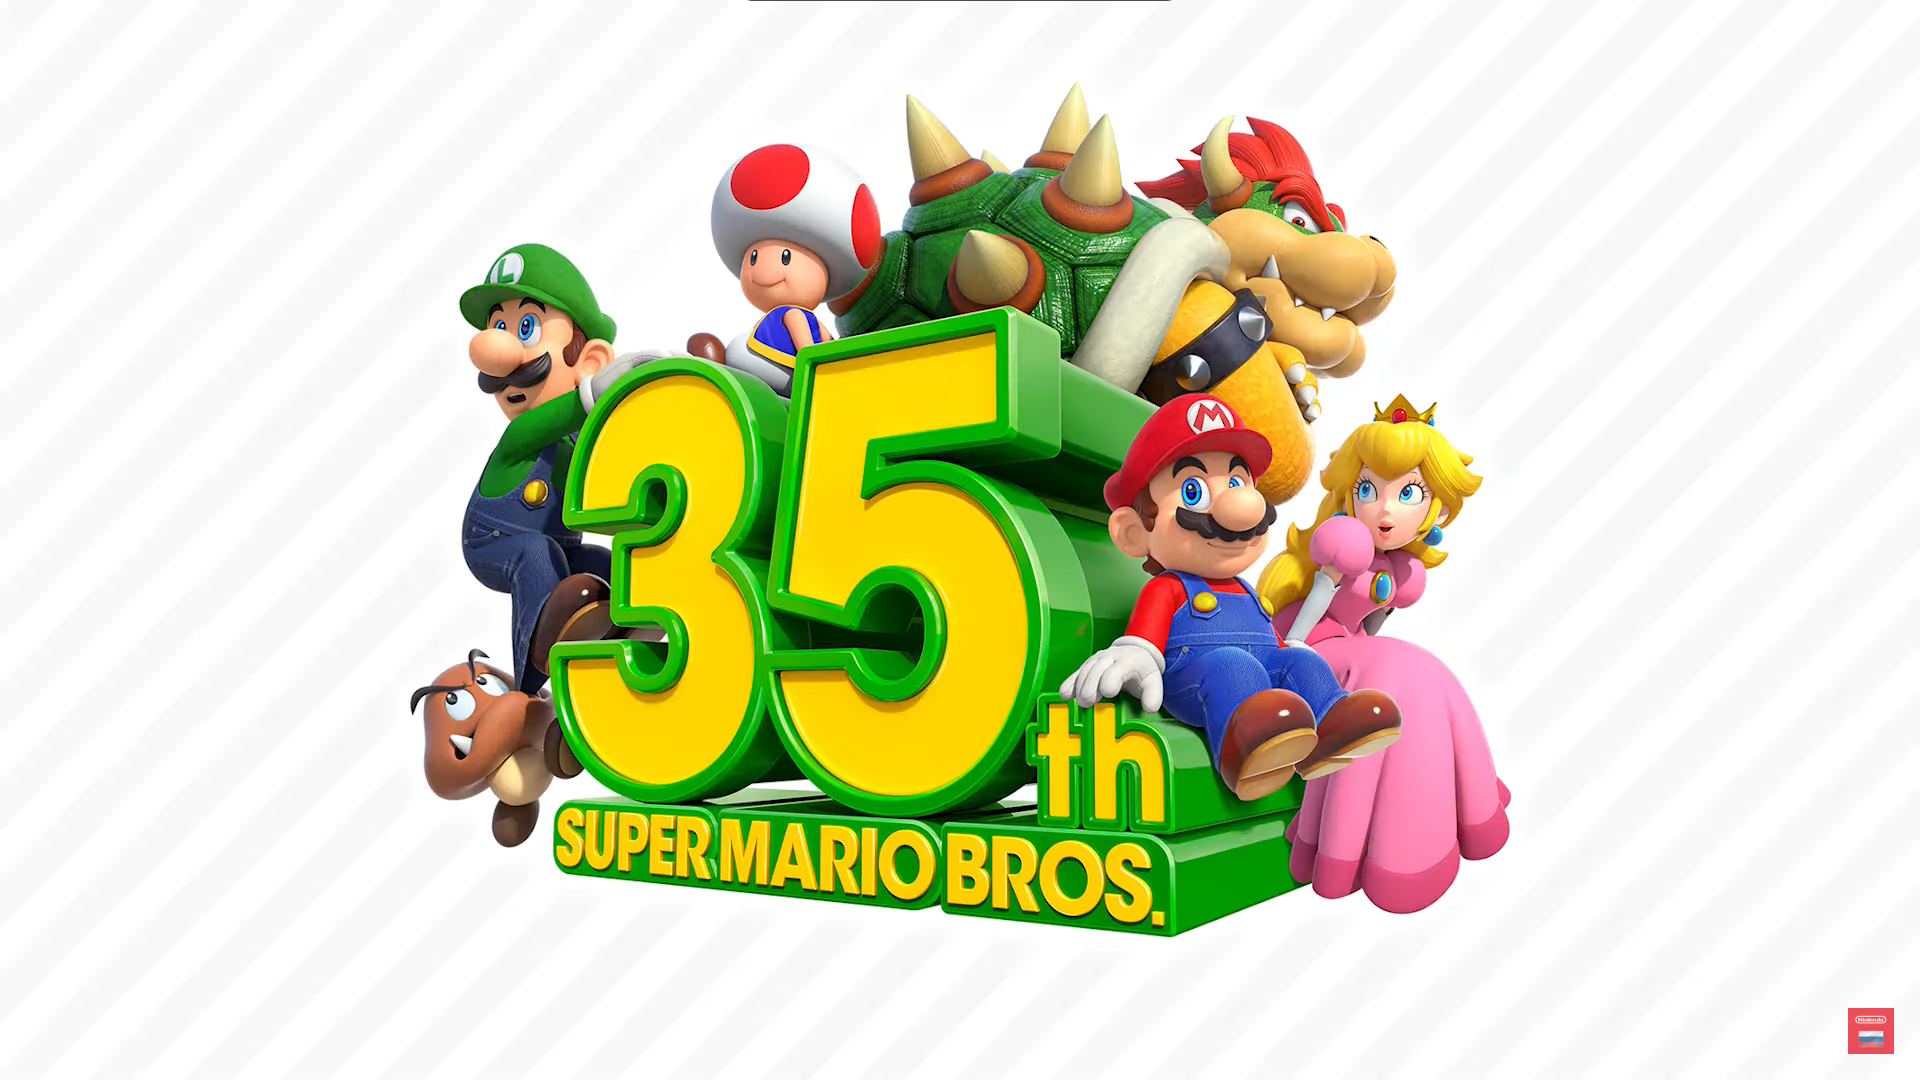 Вы сейчас просматриваете Презентация Super Mario Bros. 35th Anniversary Direct